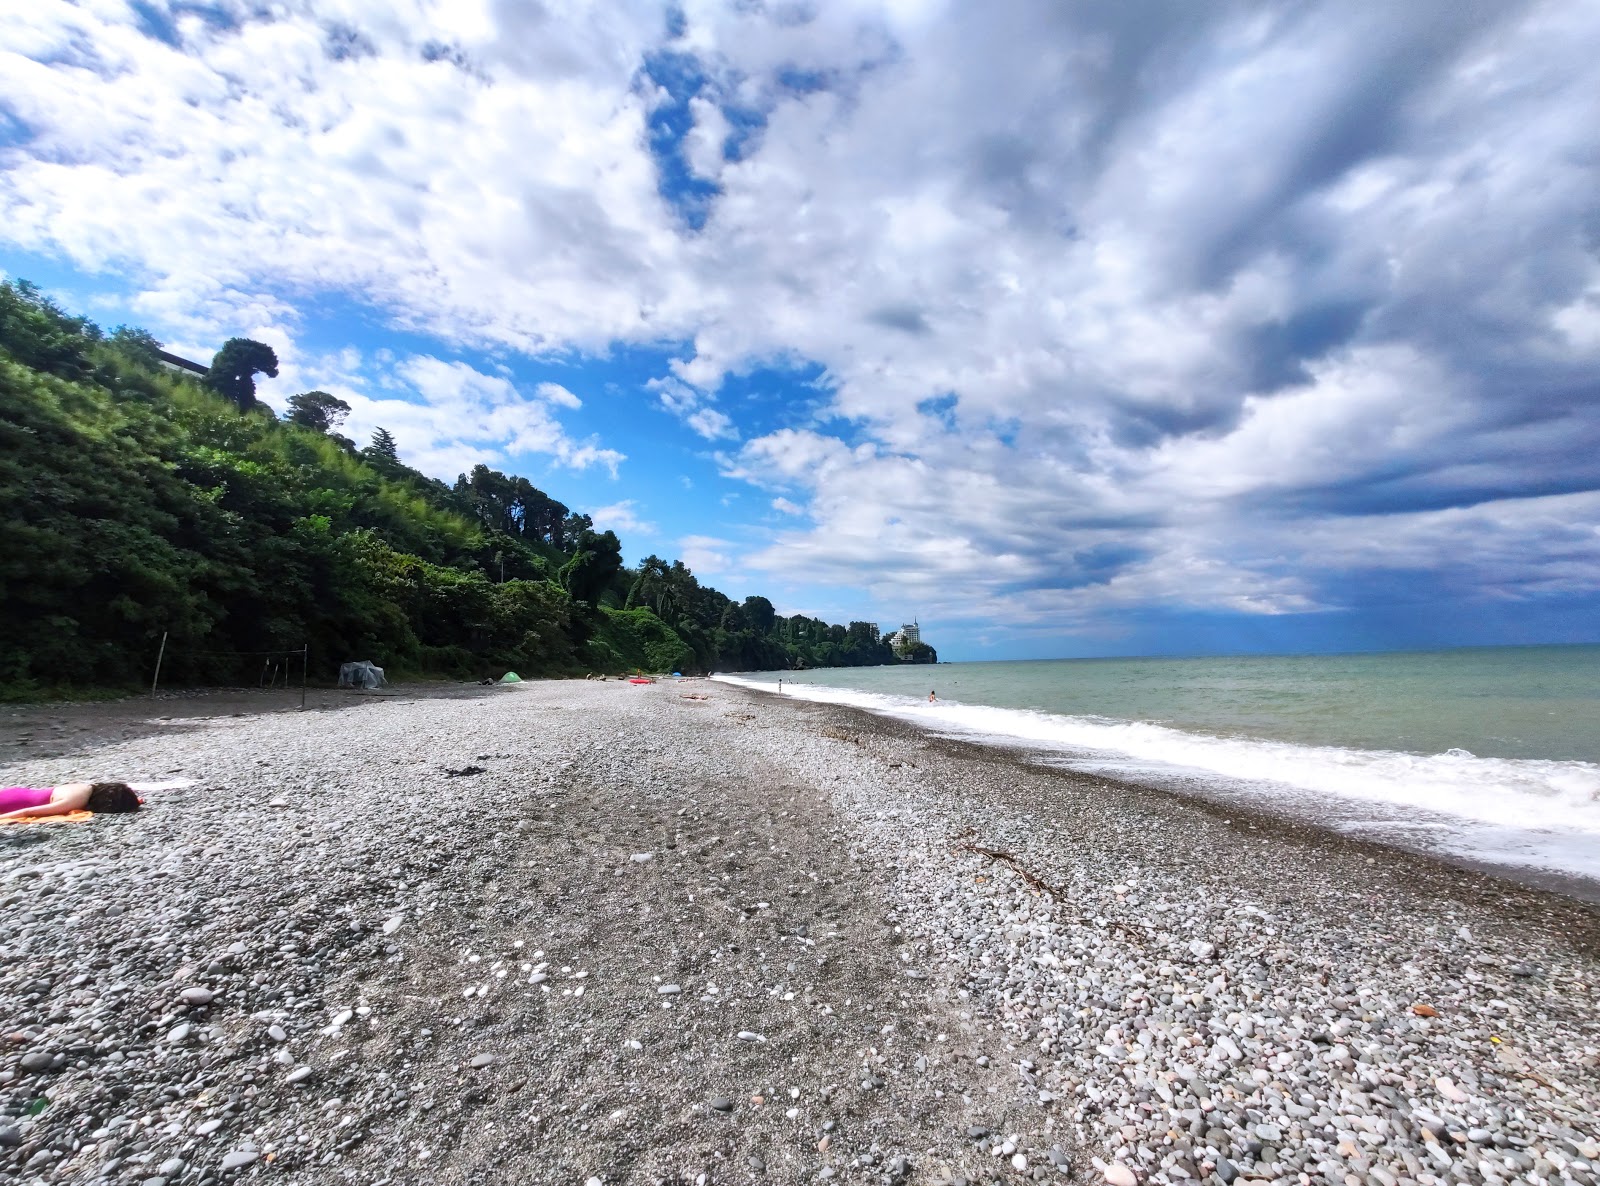 Foto de Tsikhisdziri beach II com pebble leve superfície